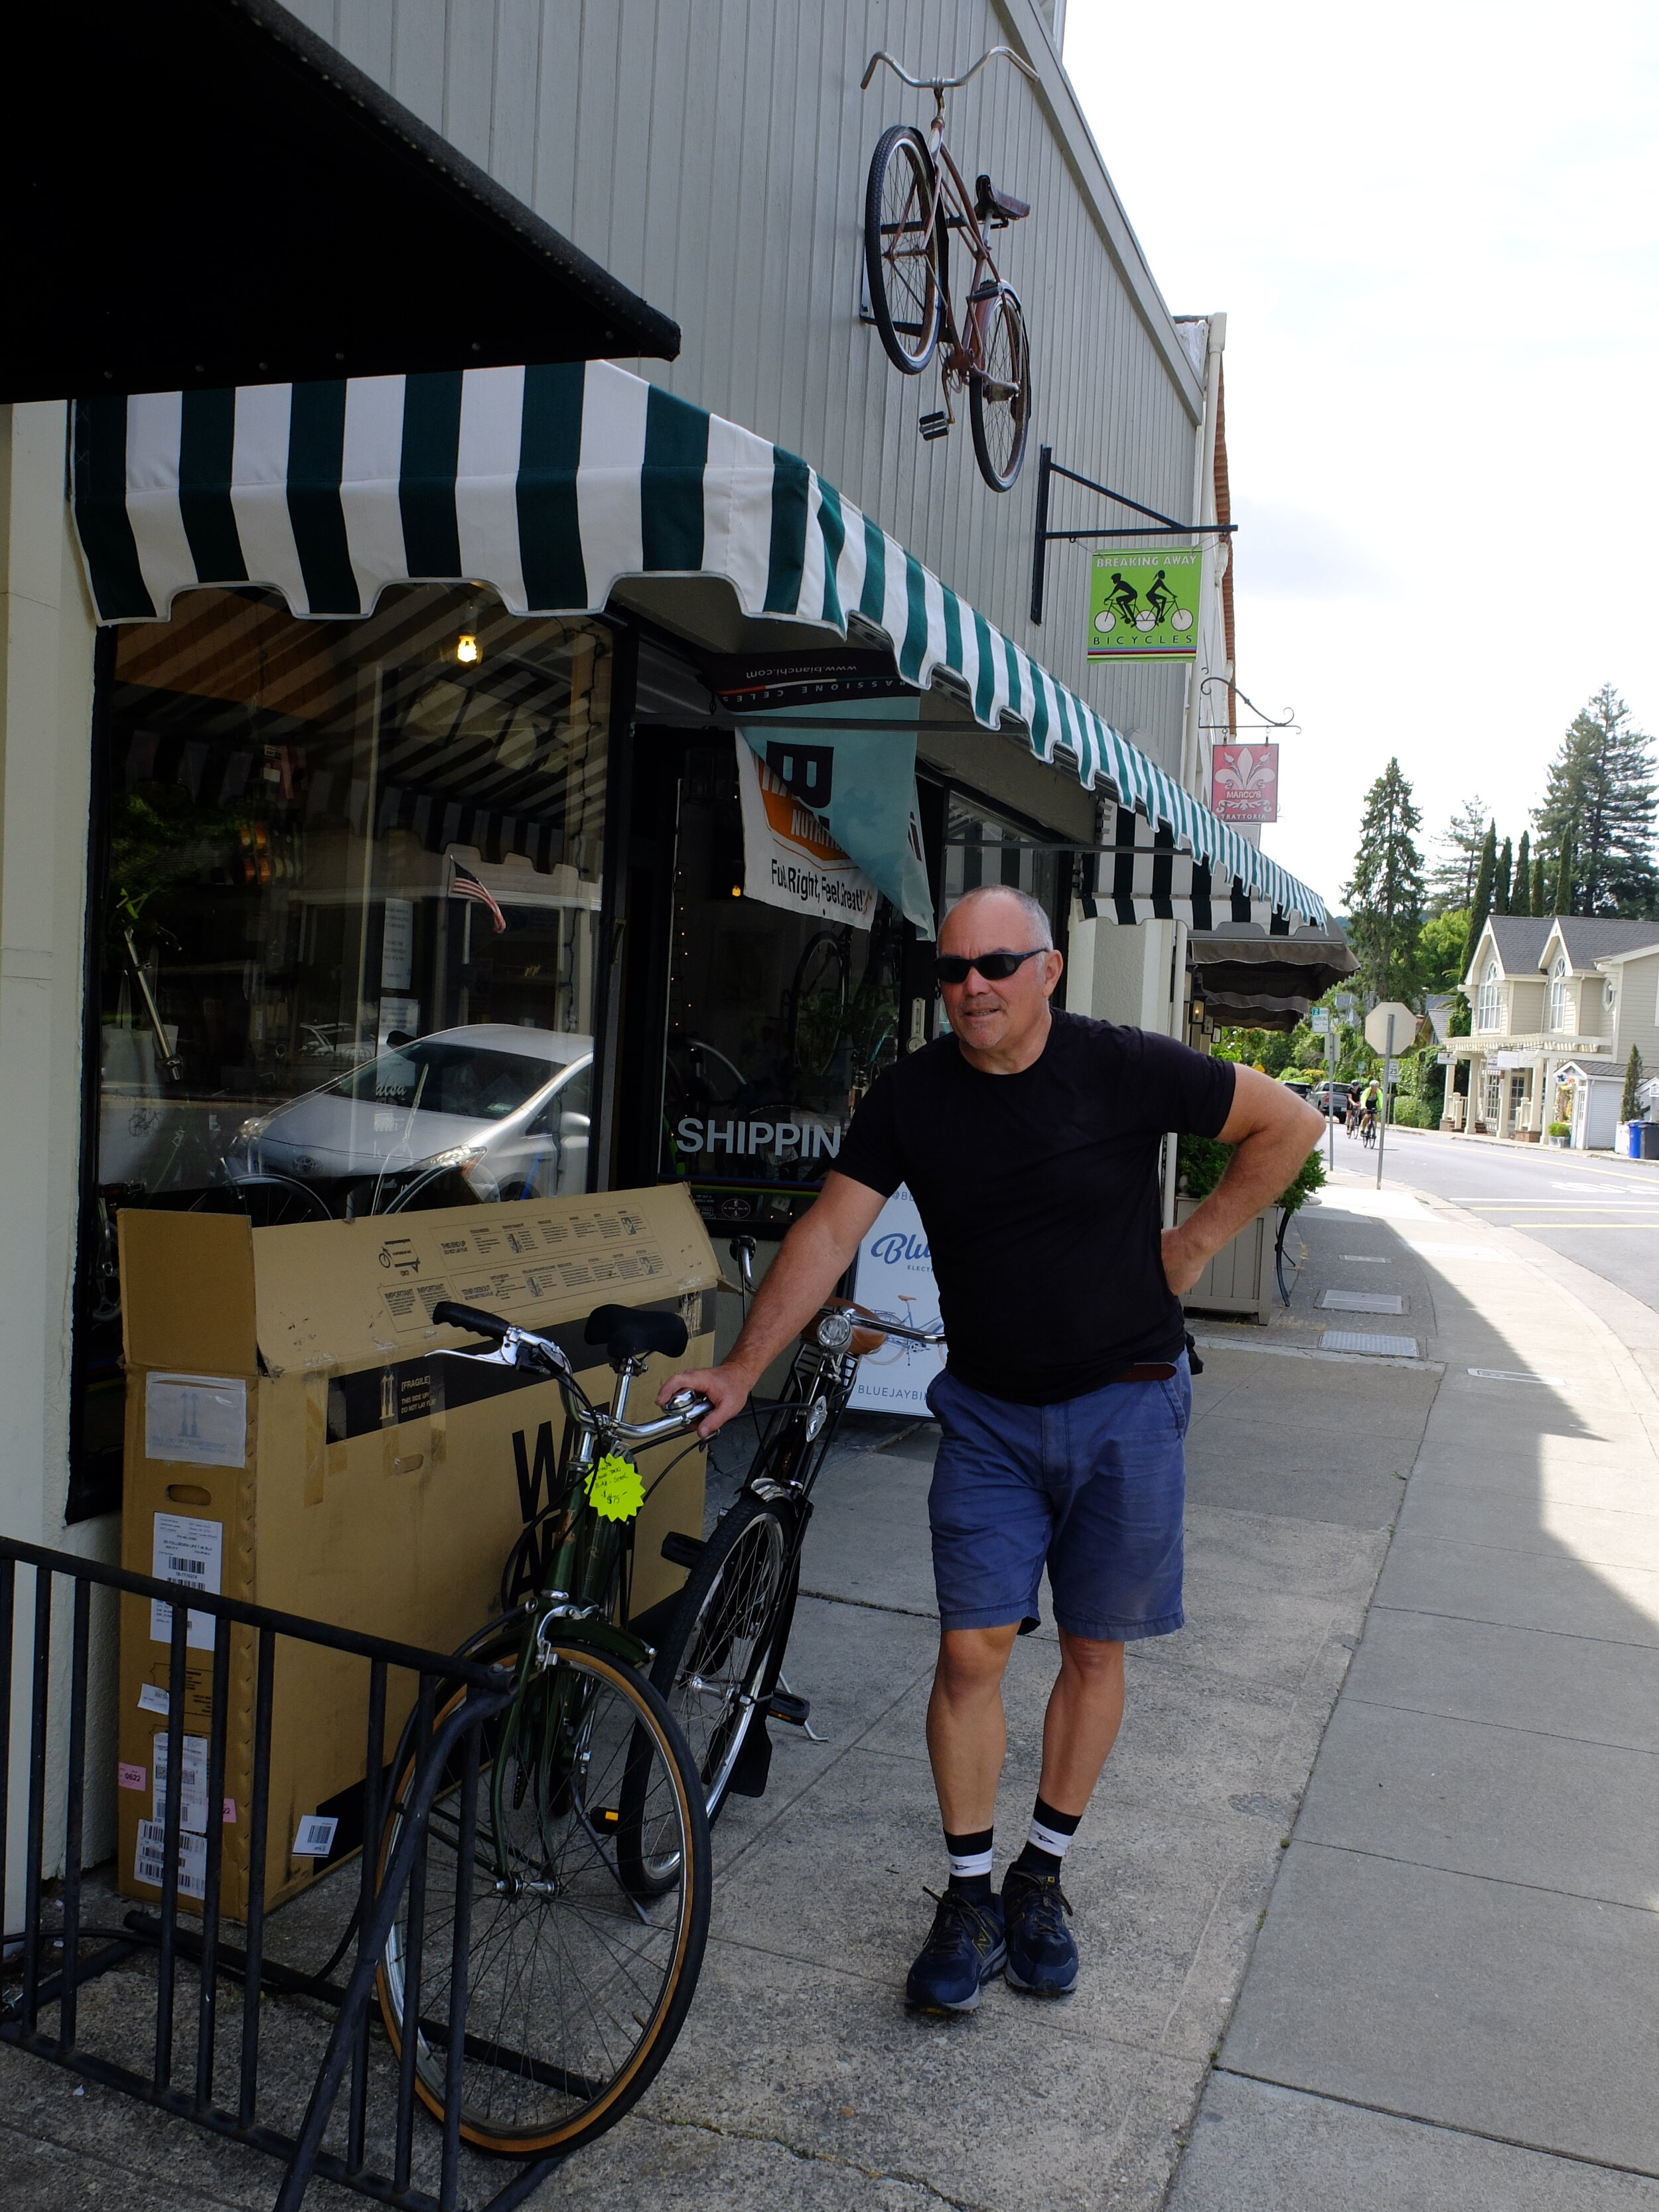 A wonderful bike repairman in Marin.  Just sayin'.